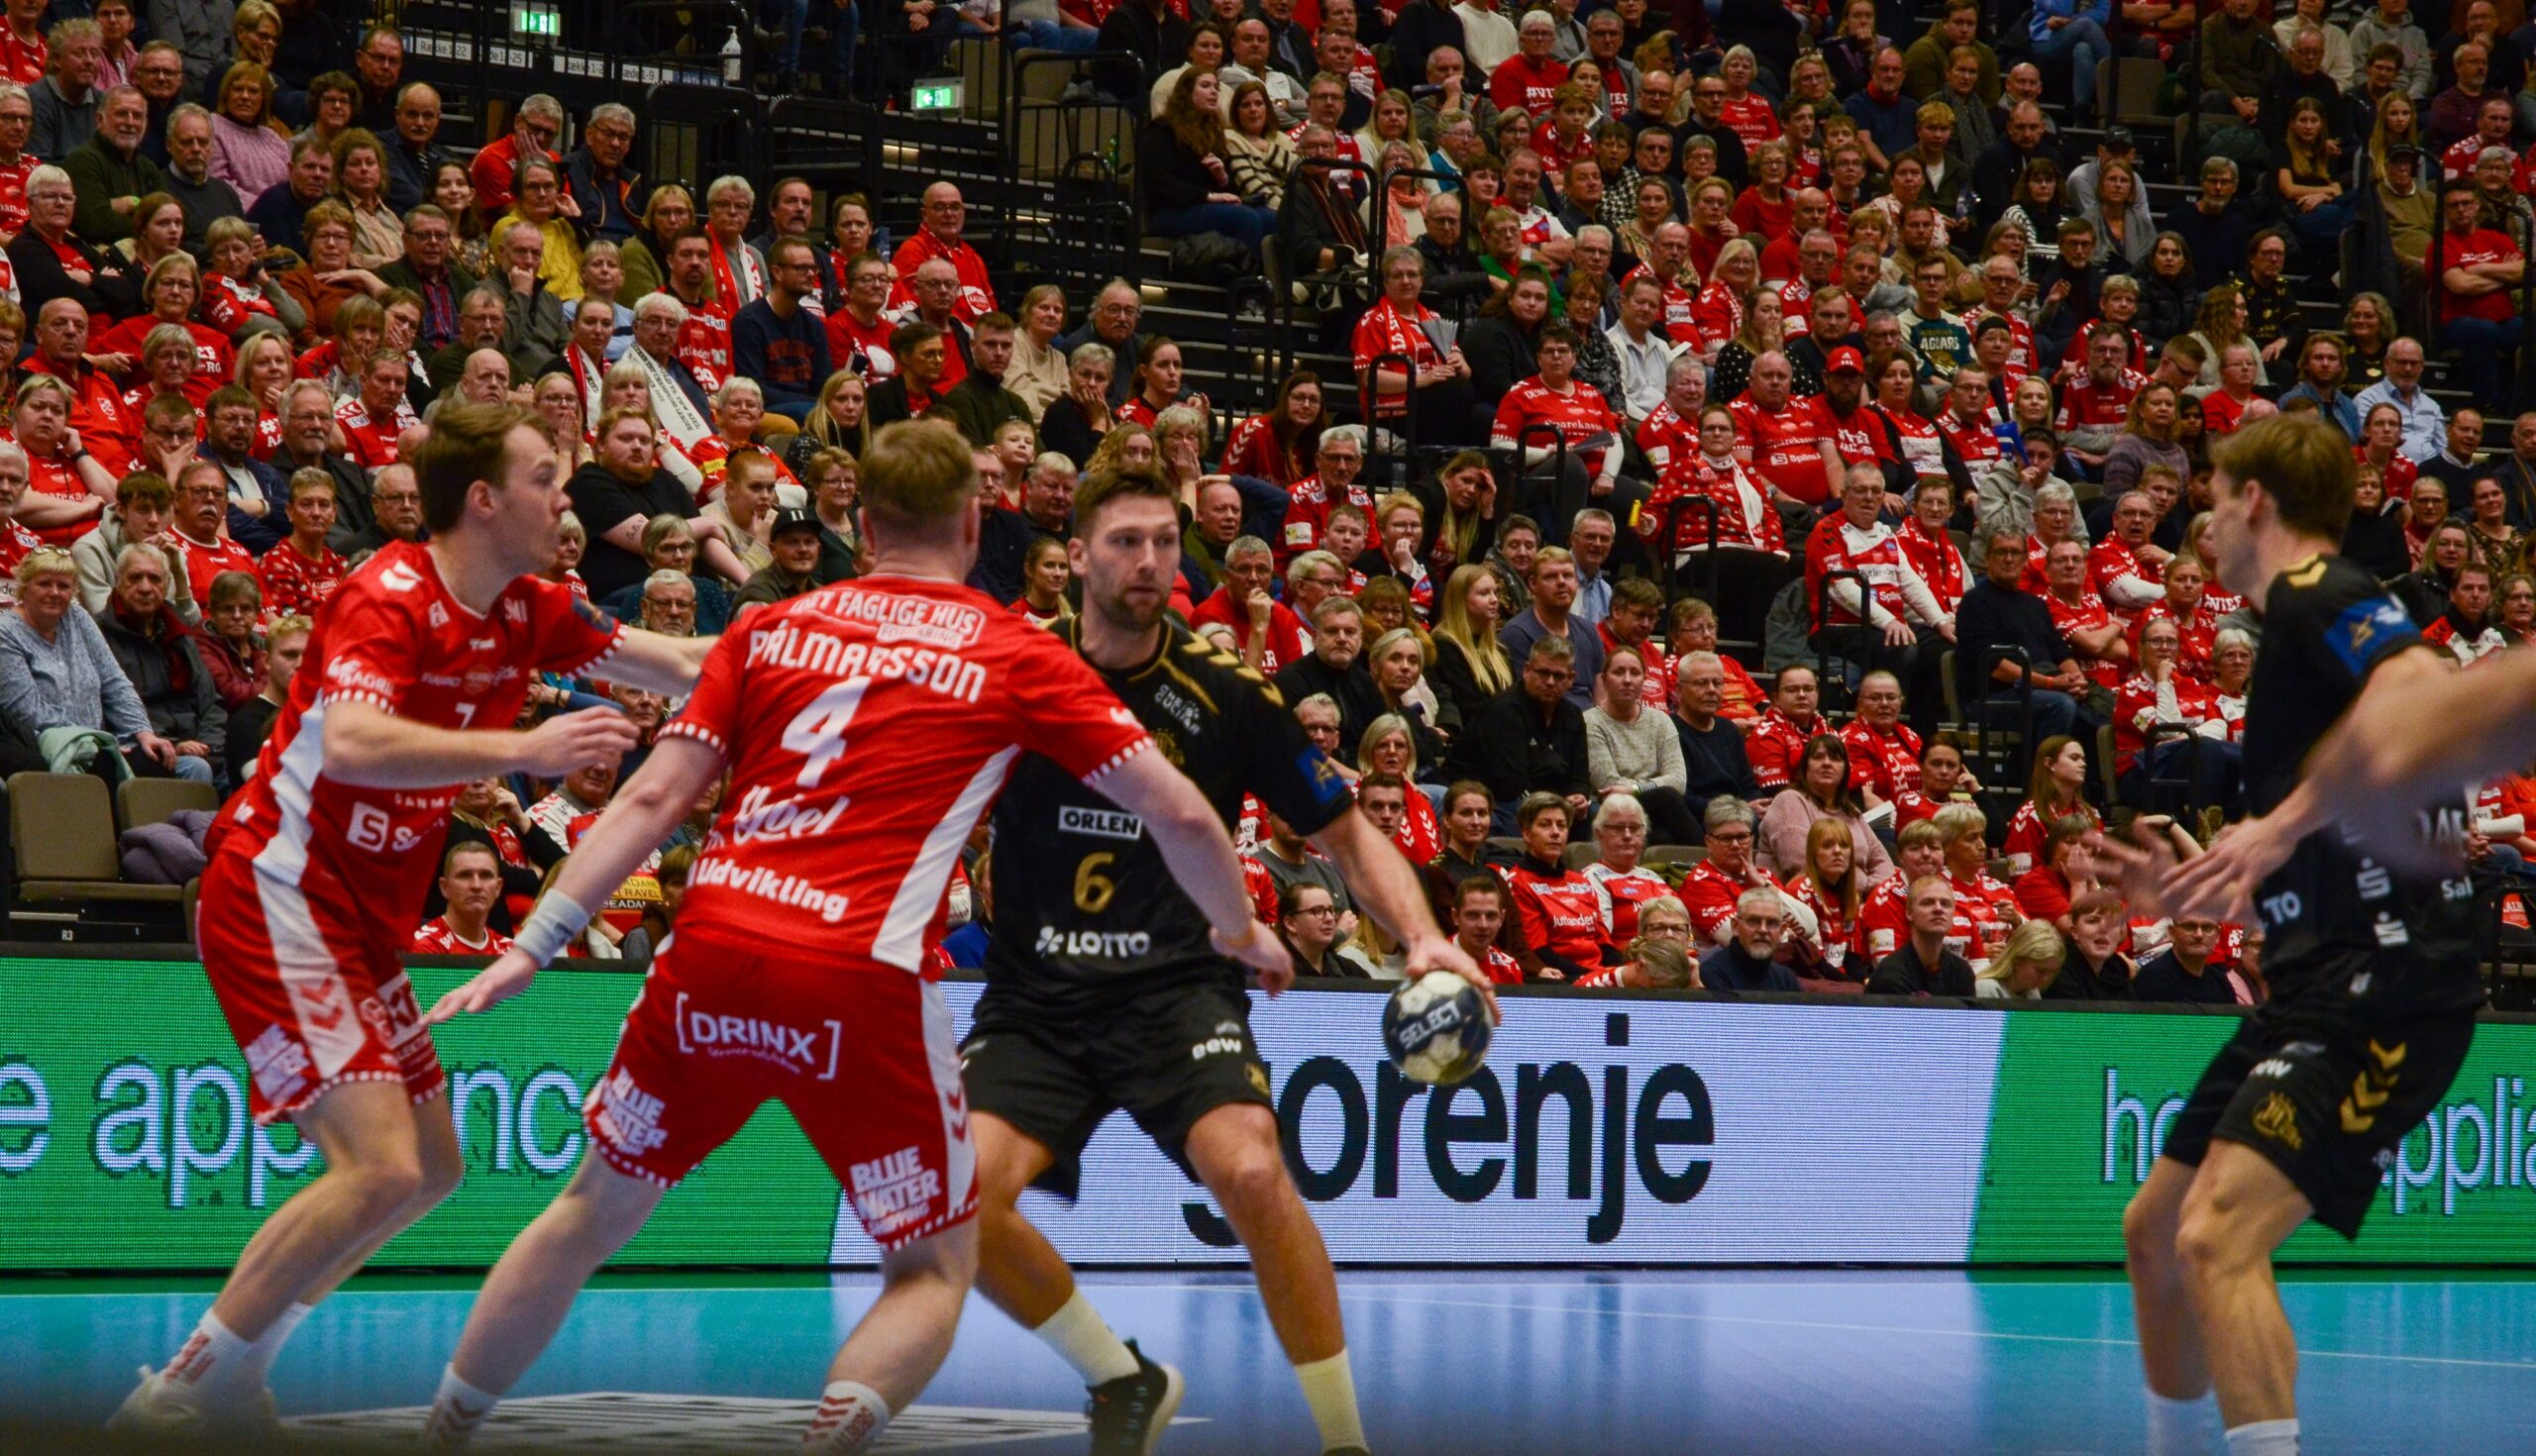 aalborg handball live